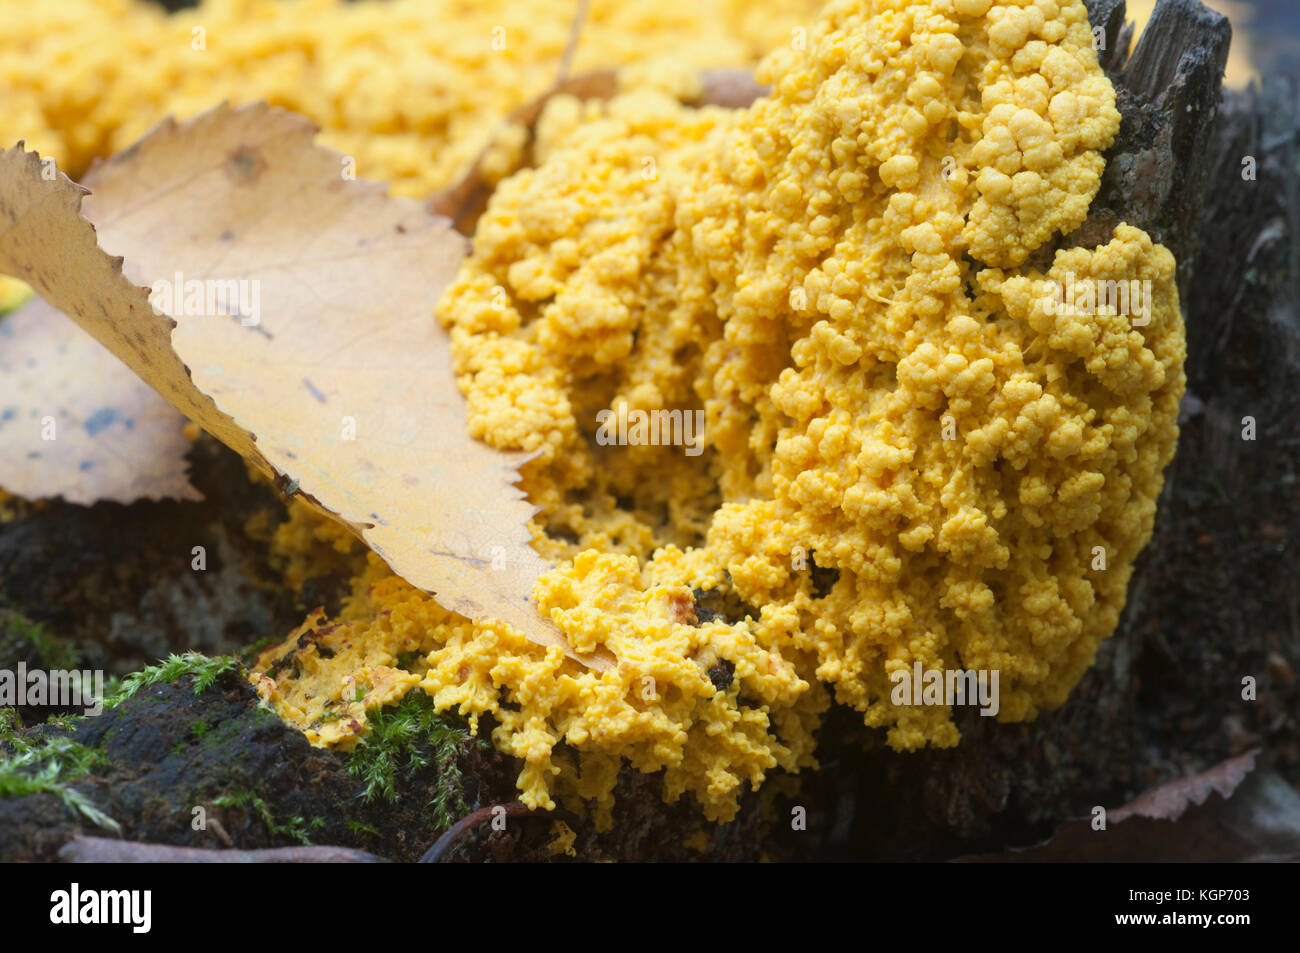 Fuligo septica mushrooms (slime mould) on an old stump Stock Photo